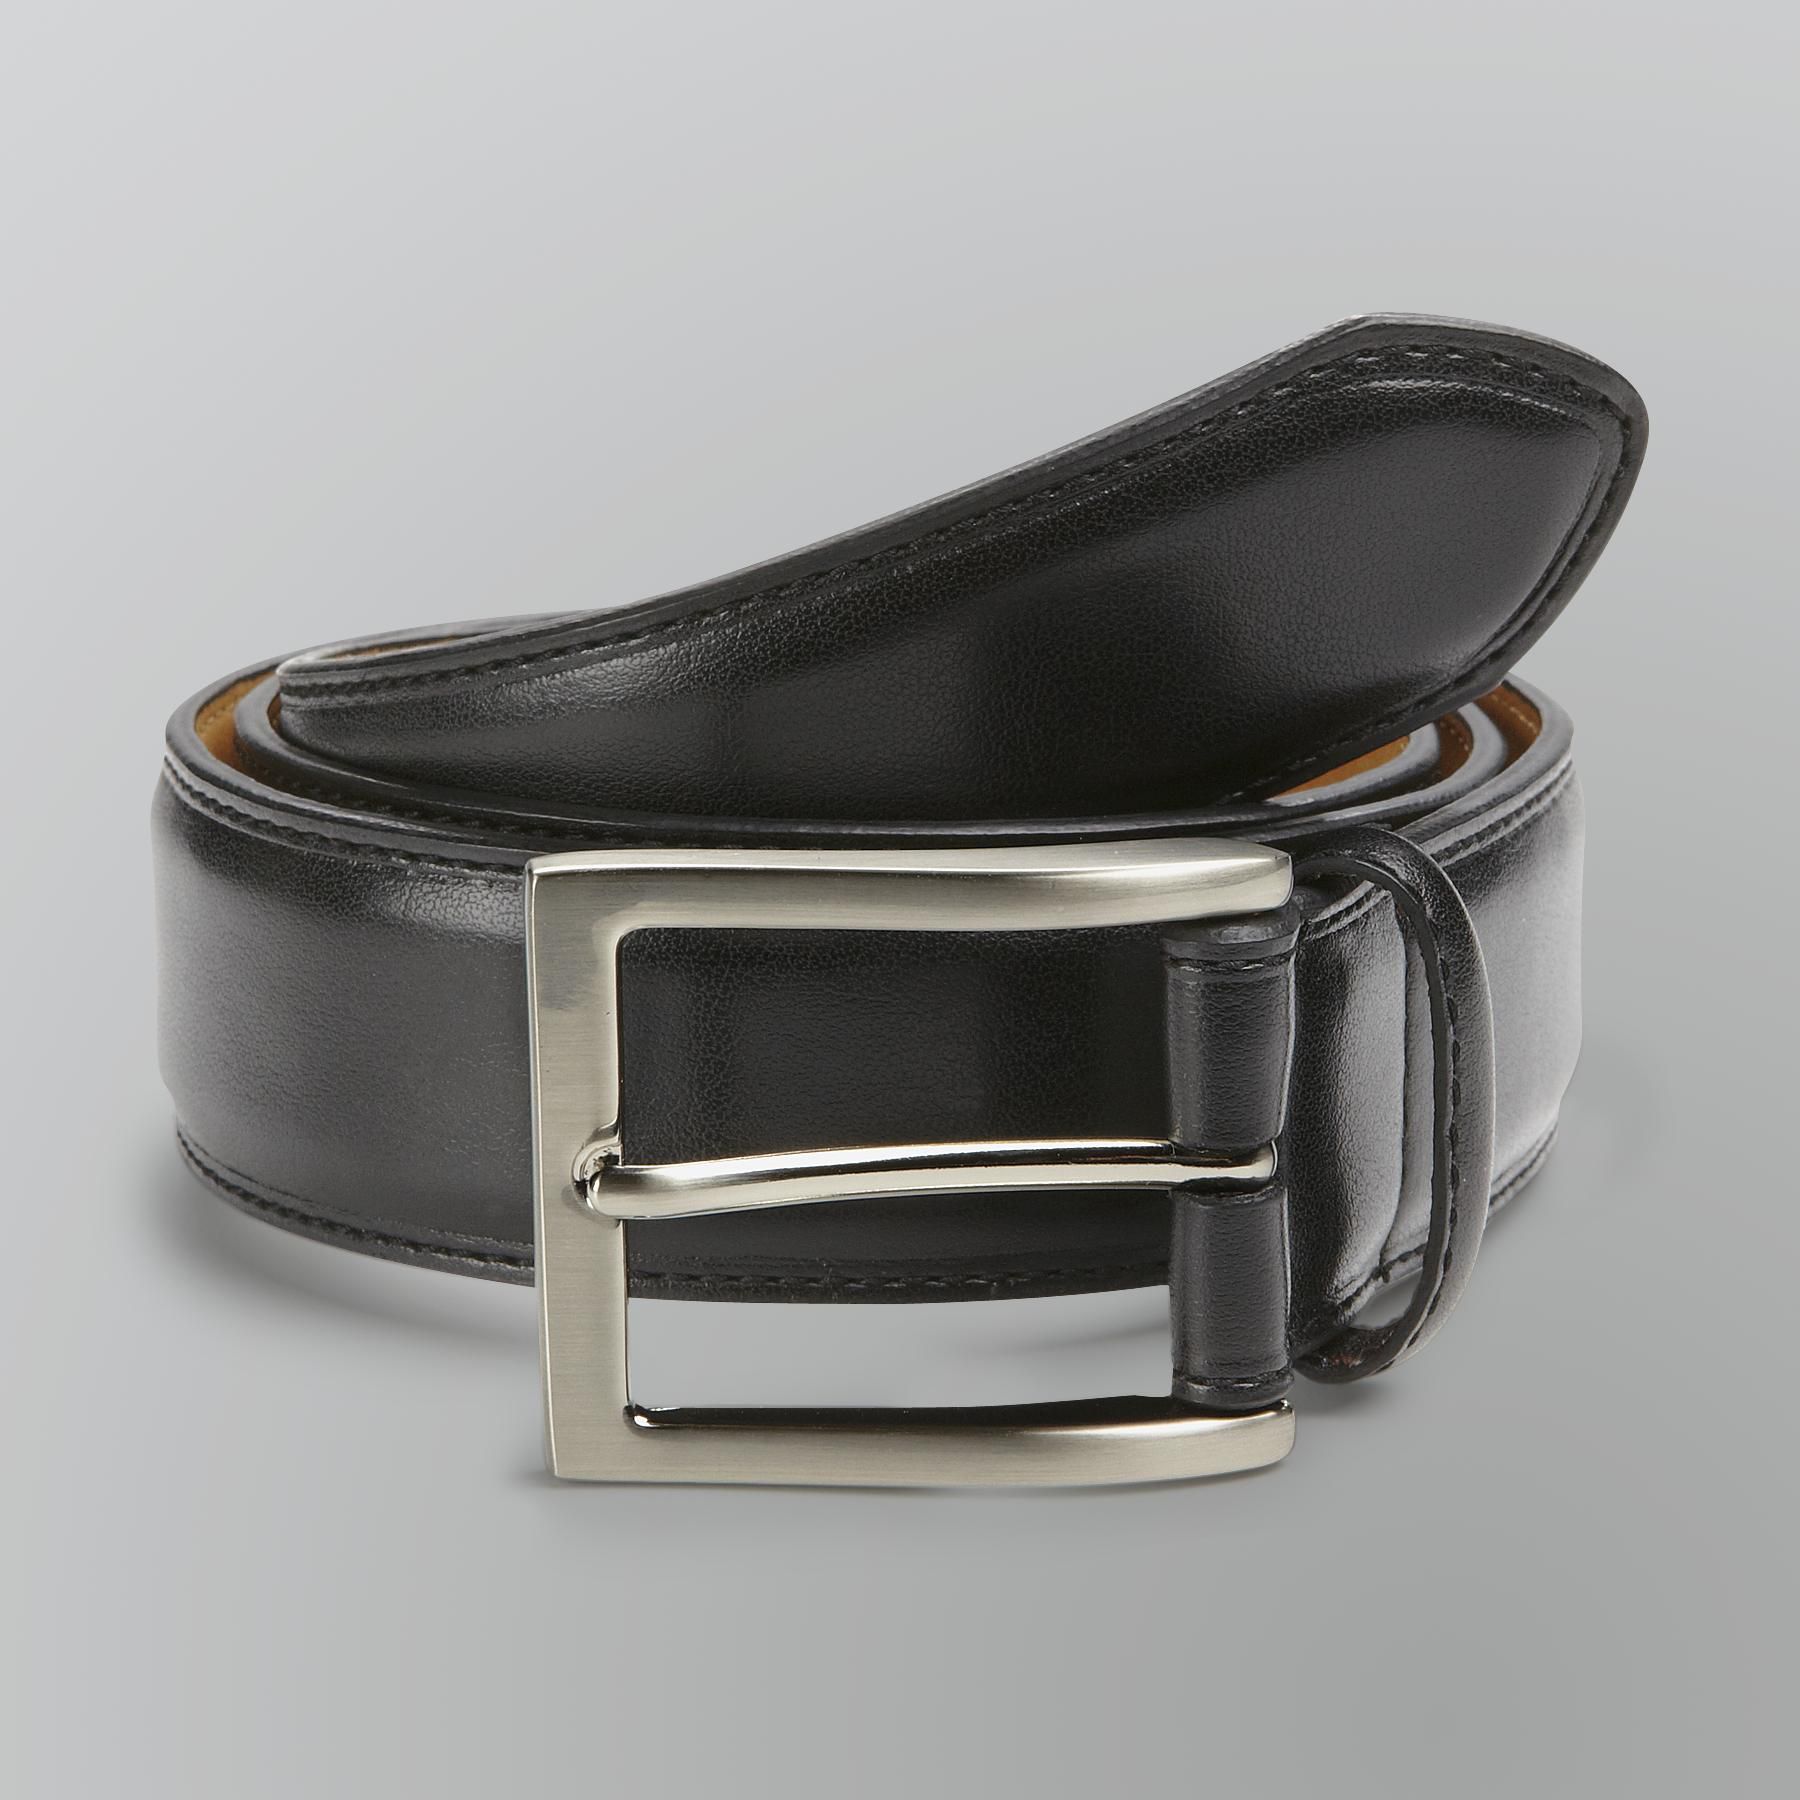 David Taylor Collection Men's Brushed Buckle Leather Belt